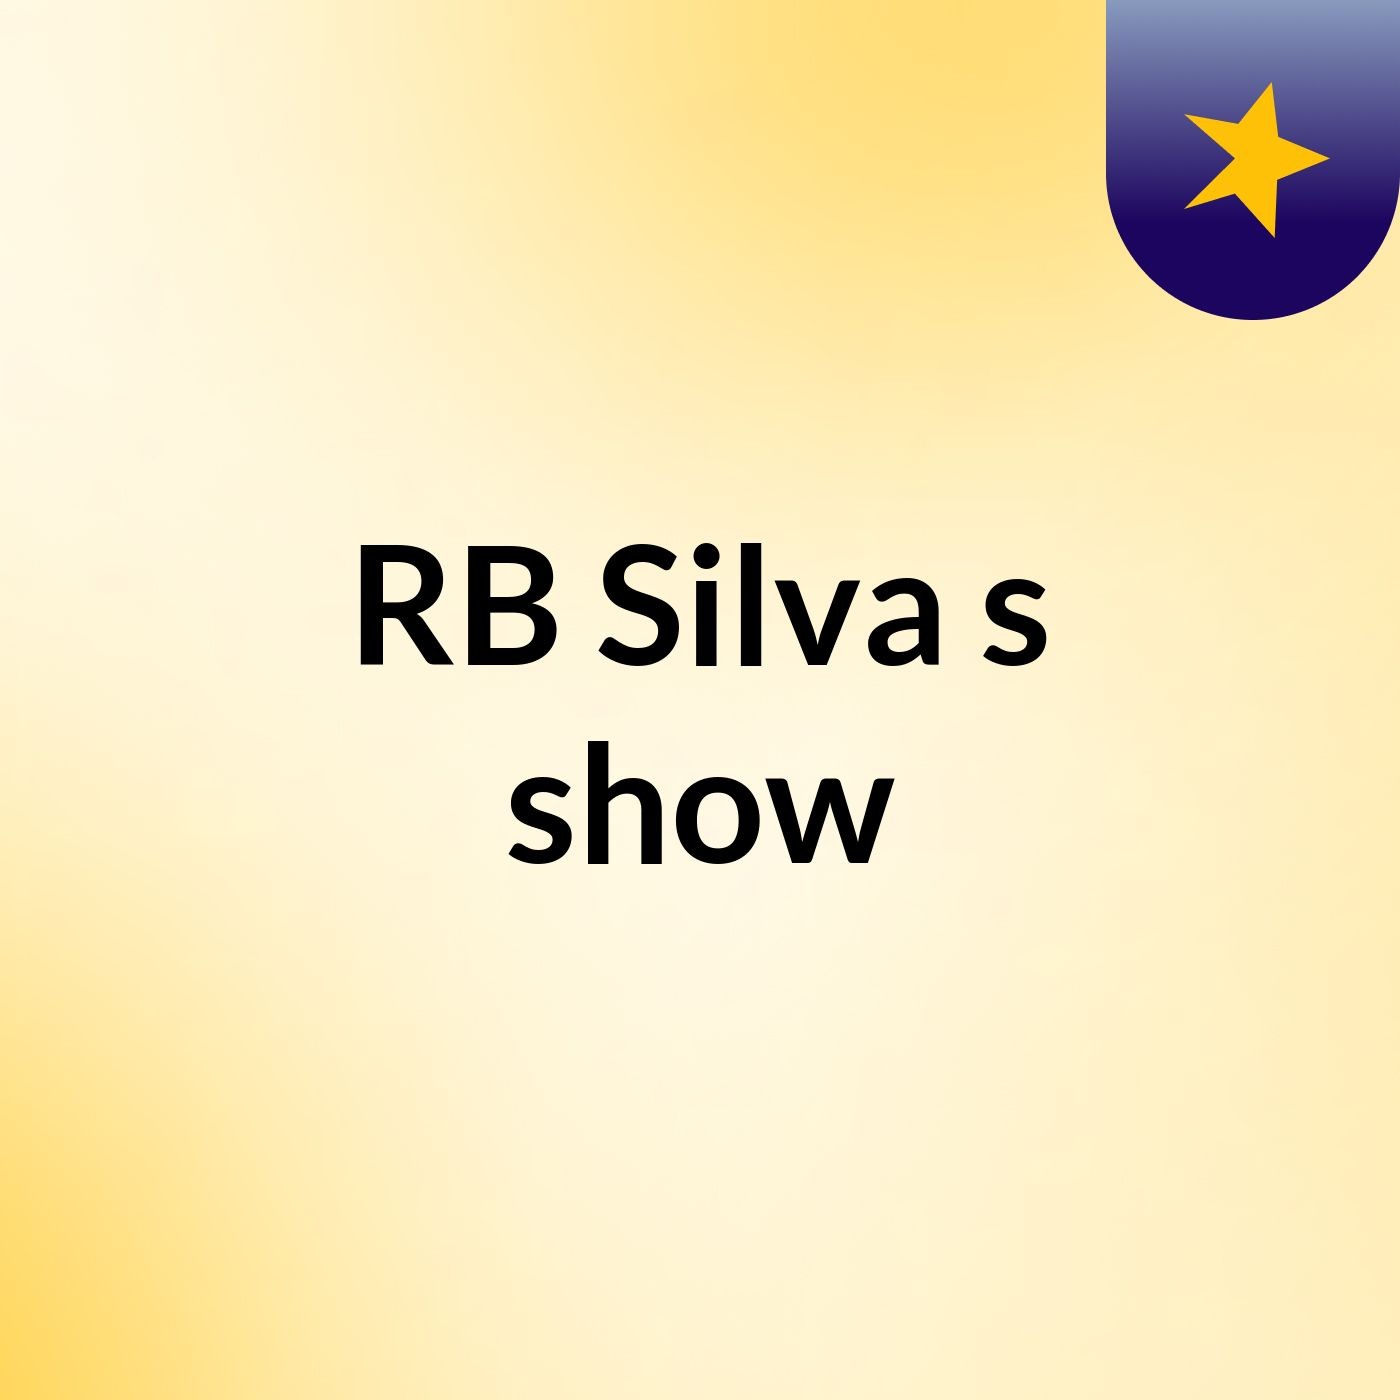 RB Silva's show